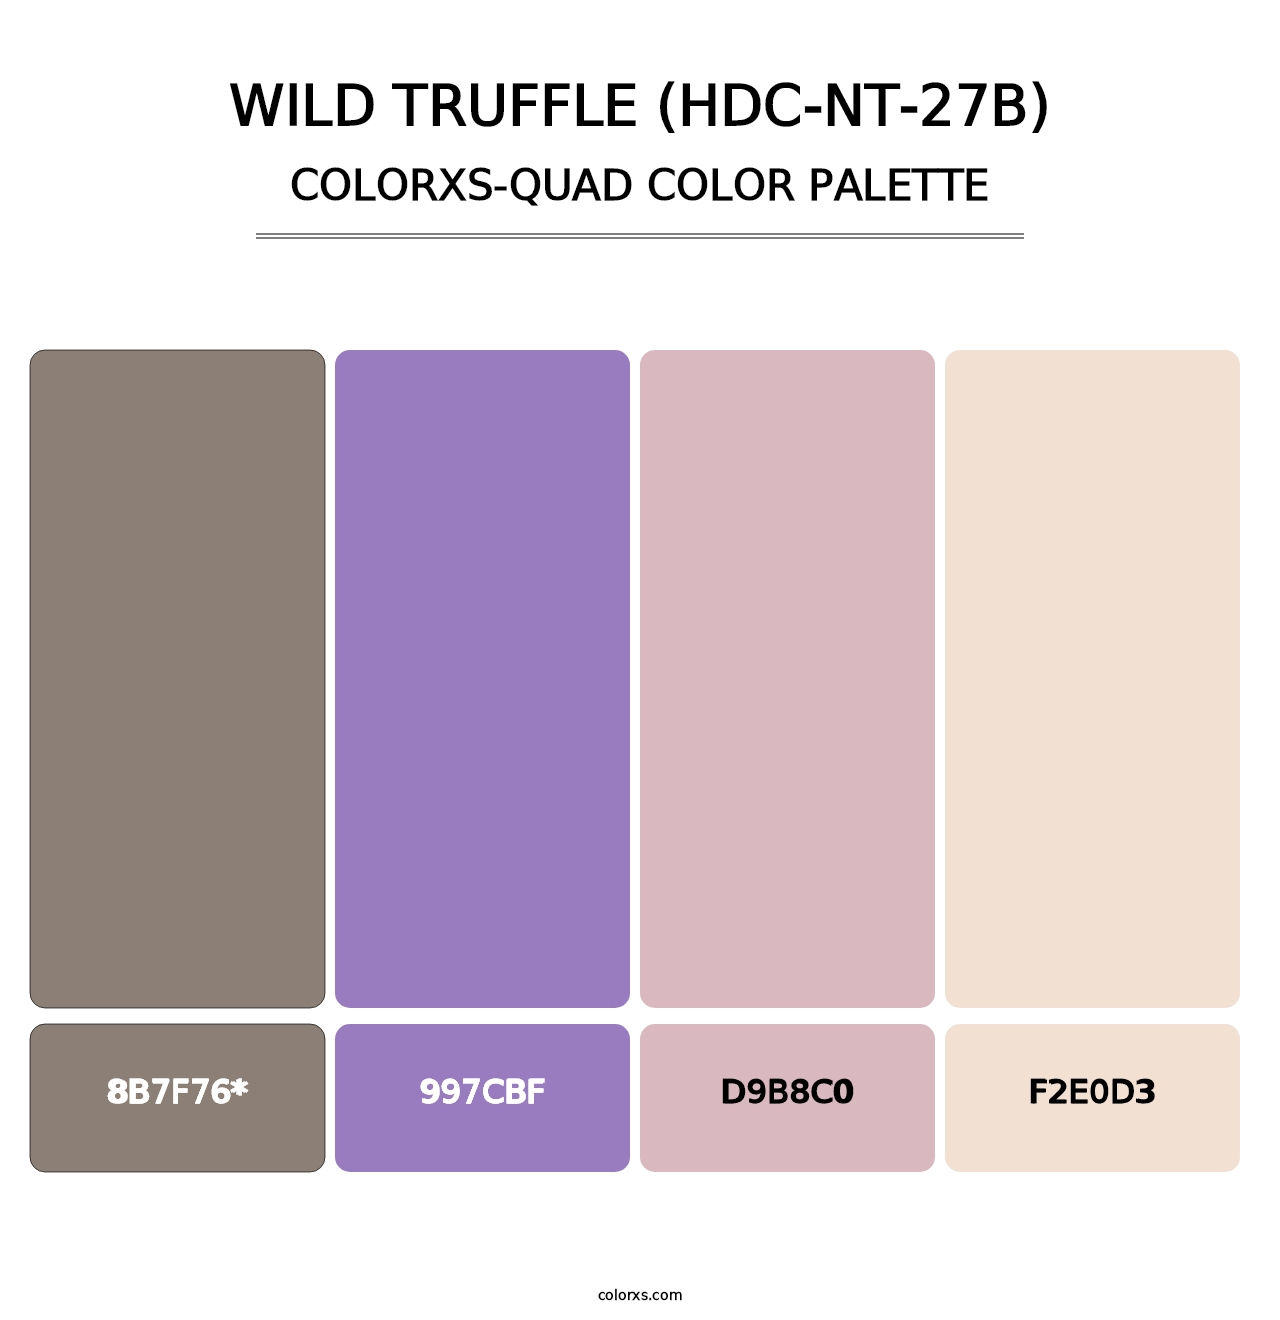 Wild Truffle (HDC-NT-27B) - Colorxs Quad Palette